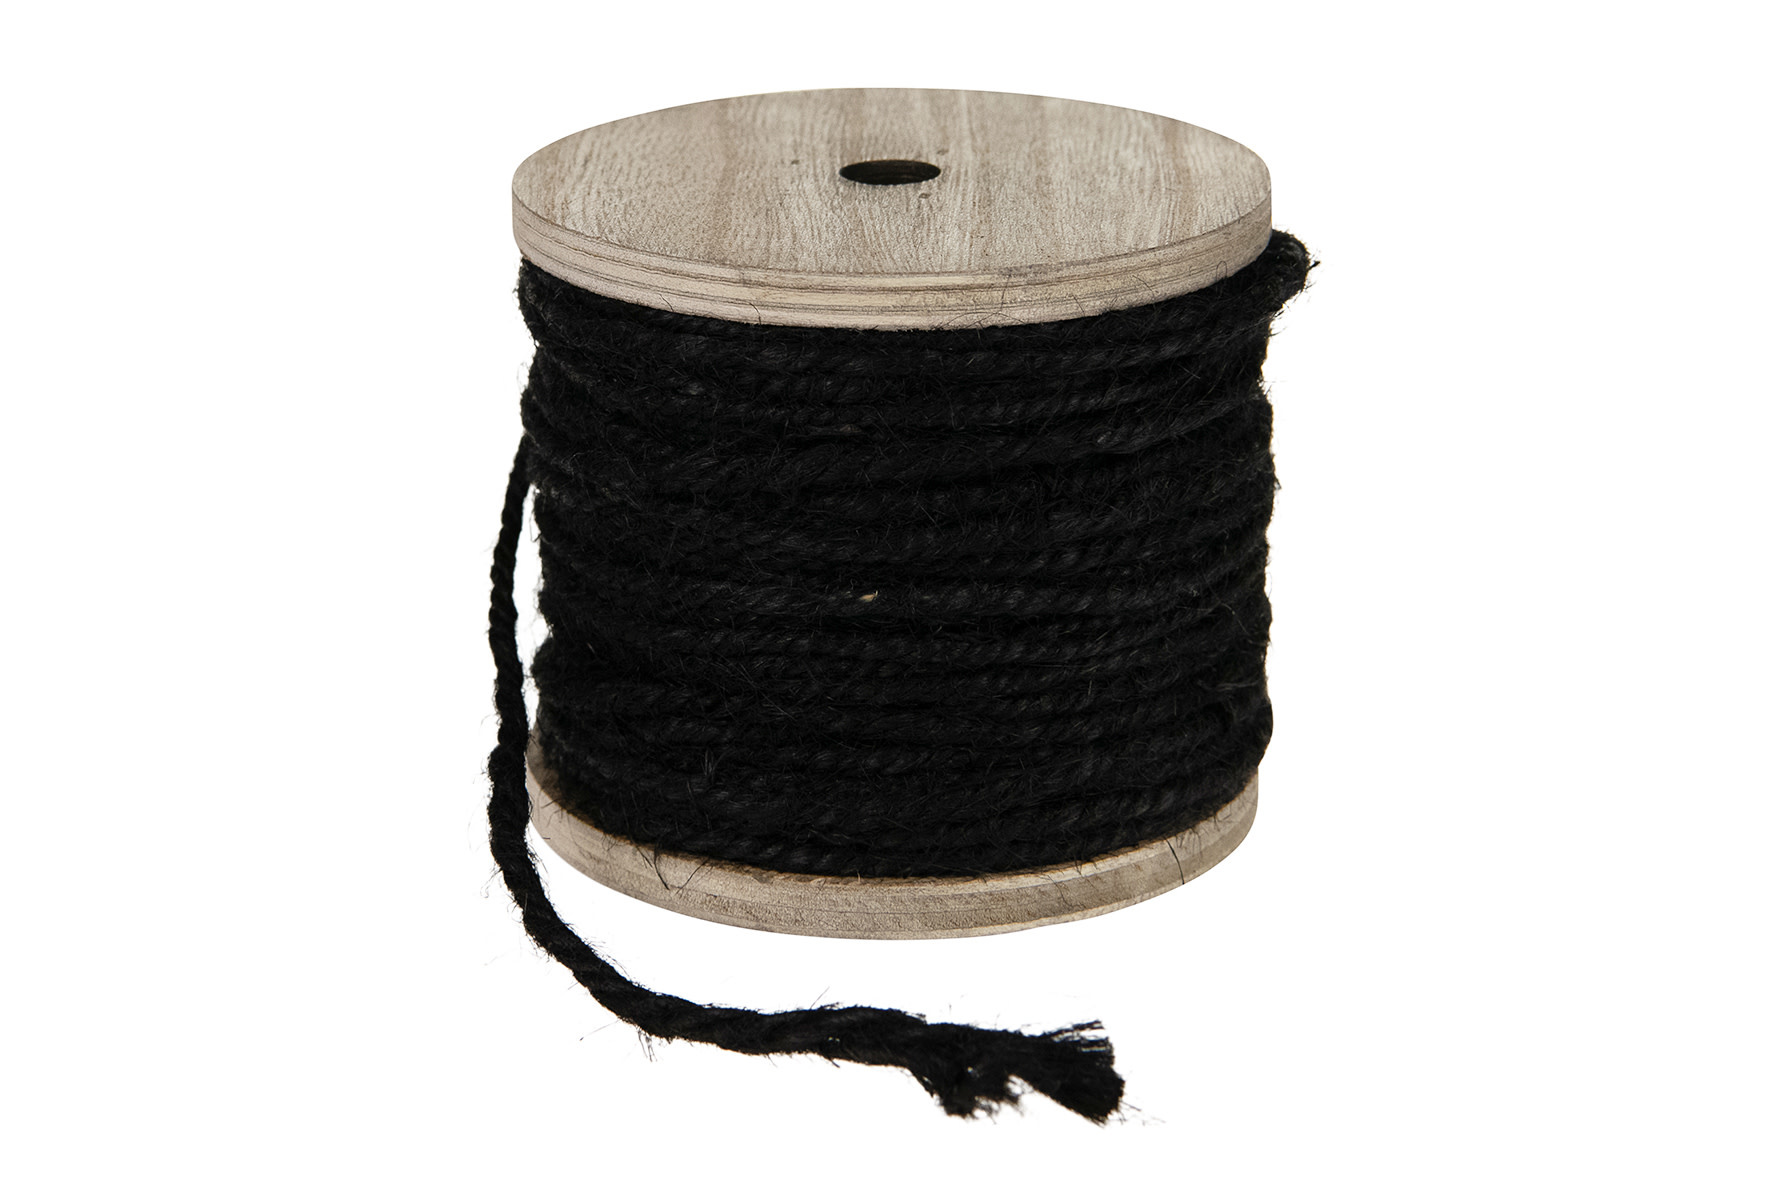 Dijk Jute Rope on Wooden Spool - Black - 130gr